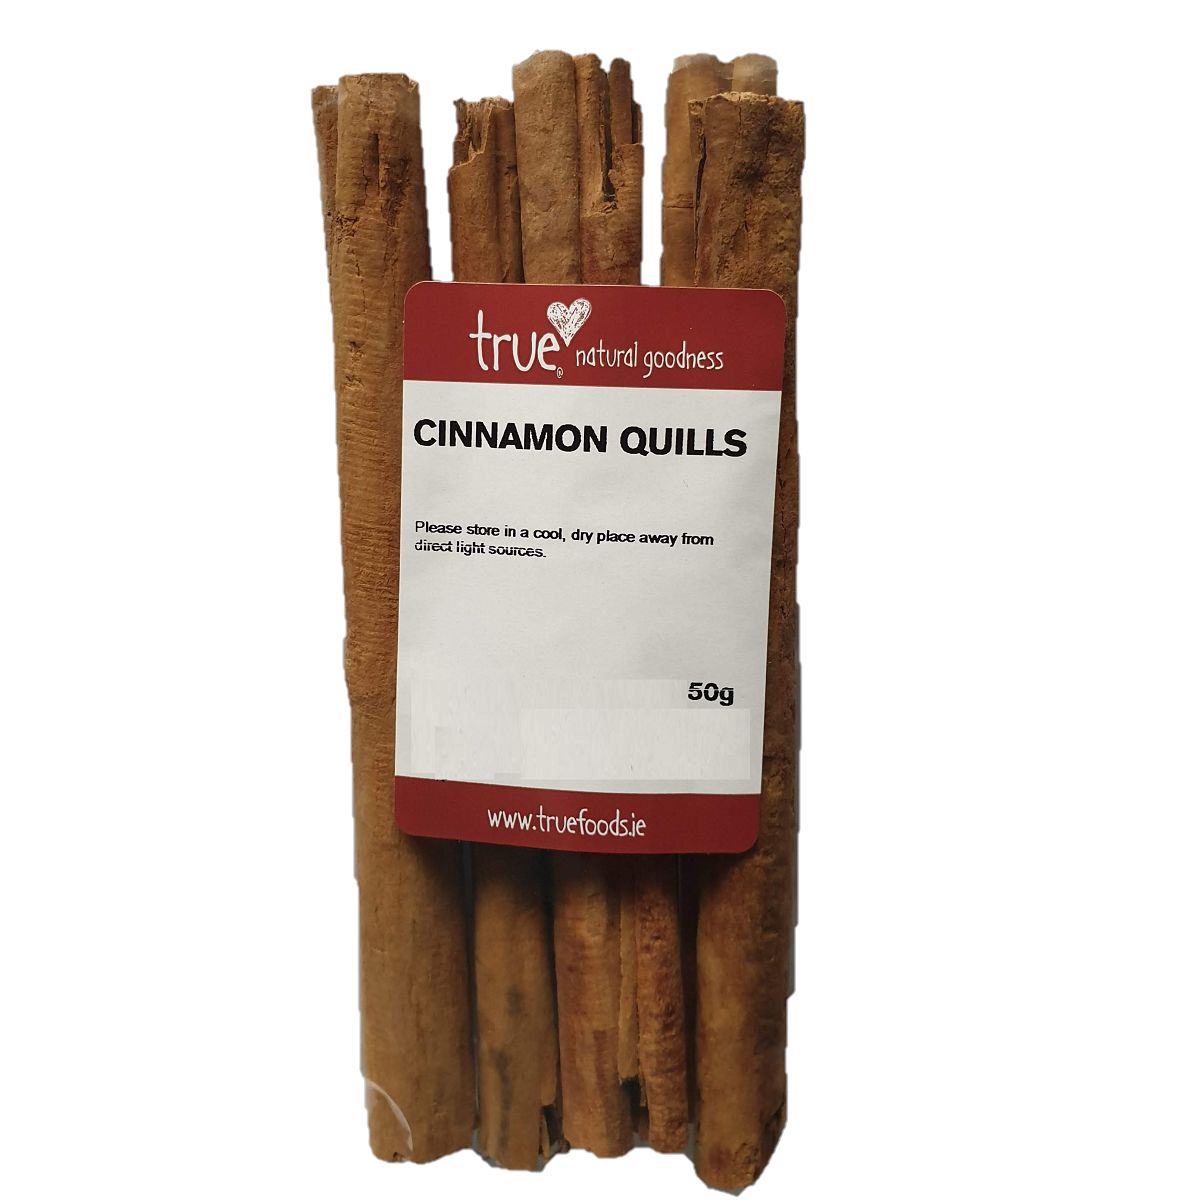 True Natural Goodness Cinnamon Quills 50g